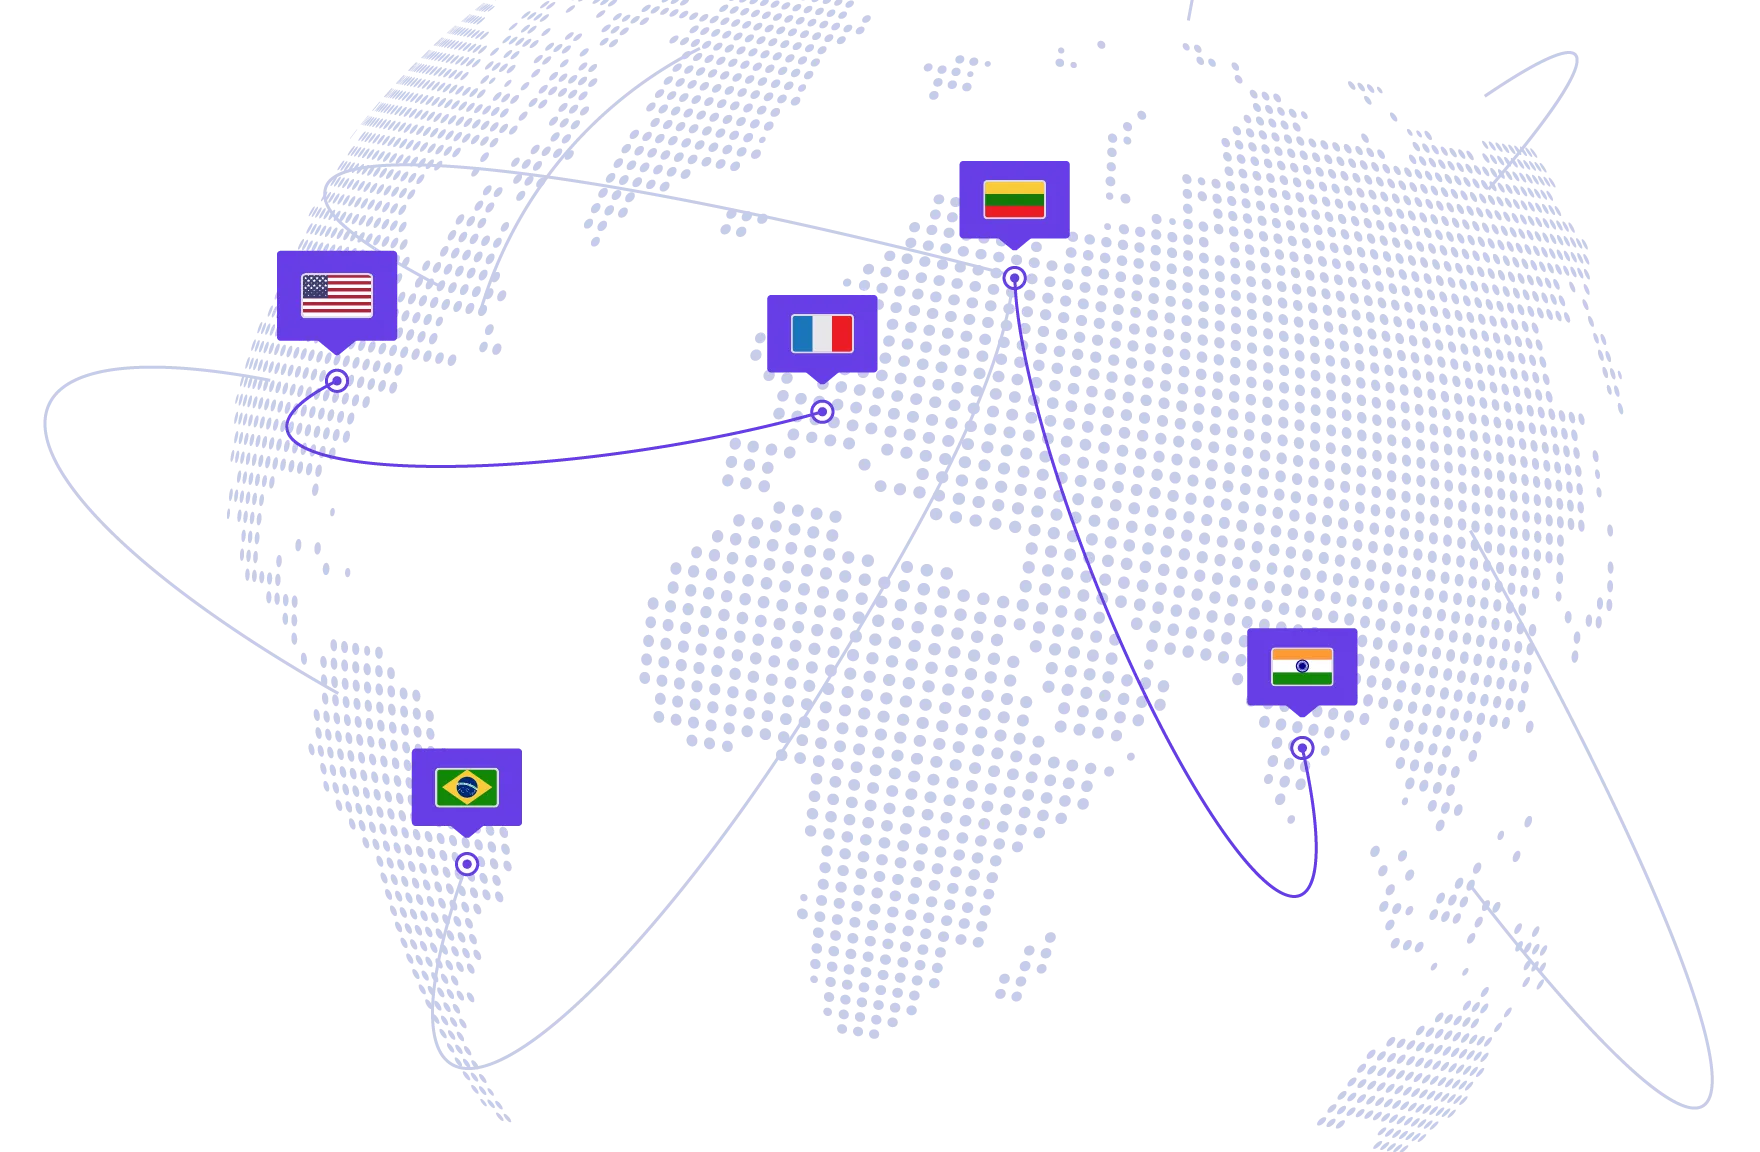 Worldwide Data Centres